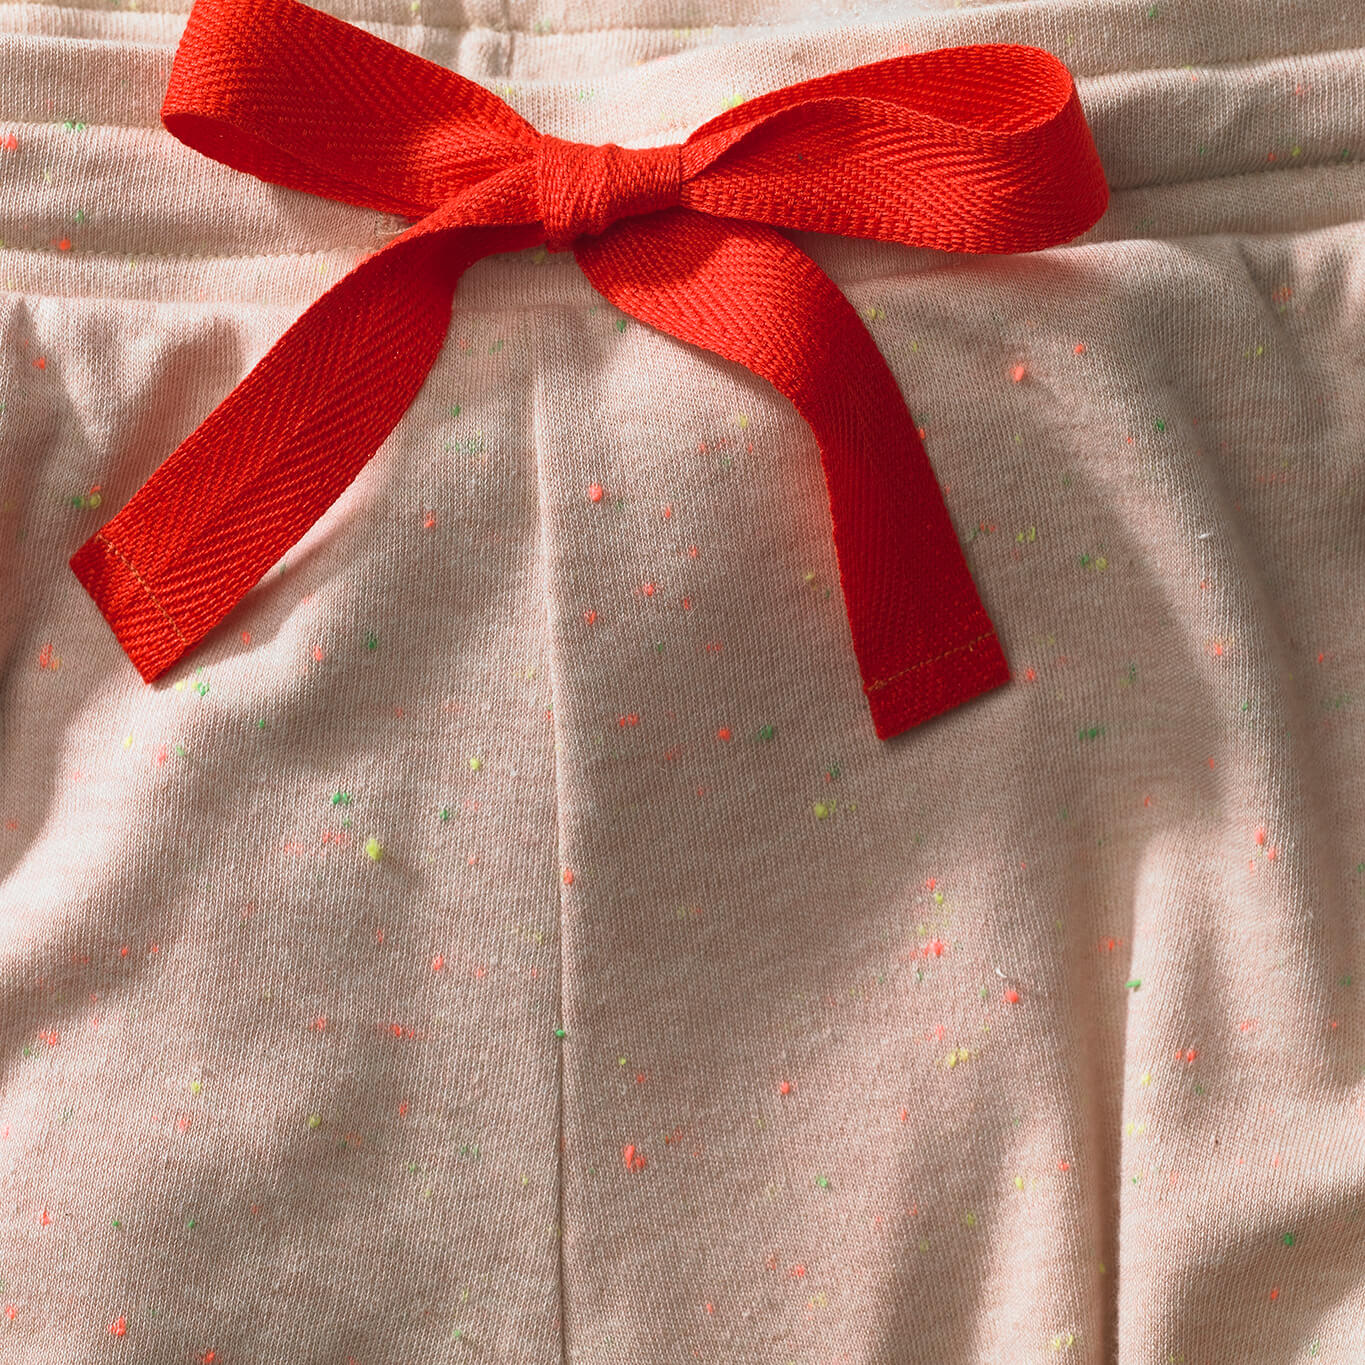 Tessie Confetti Oat Pyjama Trousers | Women's Pyjama Trousers | Ladies PJ Bottoms | Nep Fabric | Beige Pyjama Trousers with Pockets | Cuffed Pyjama Bottoms | Red Cotton Herringbone Drawstring